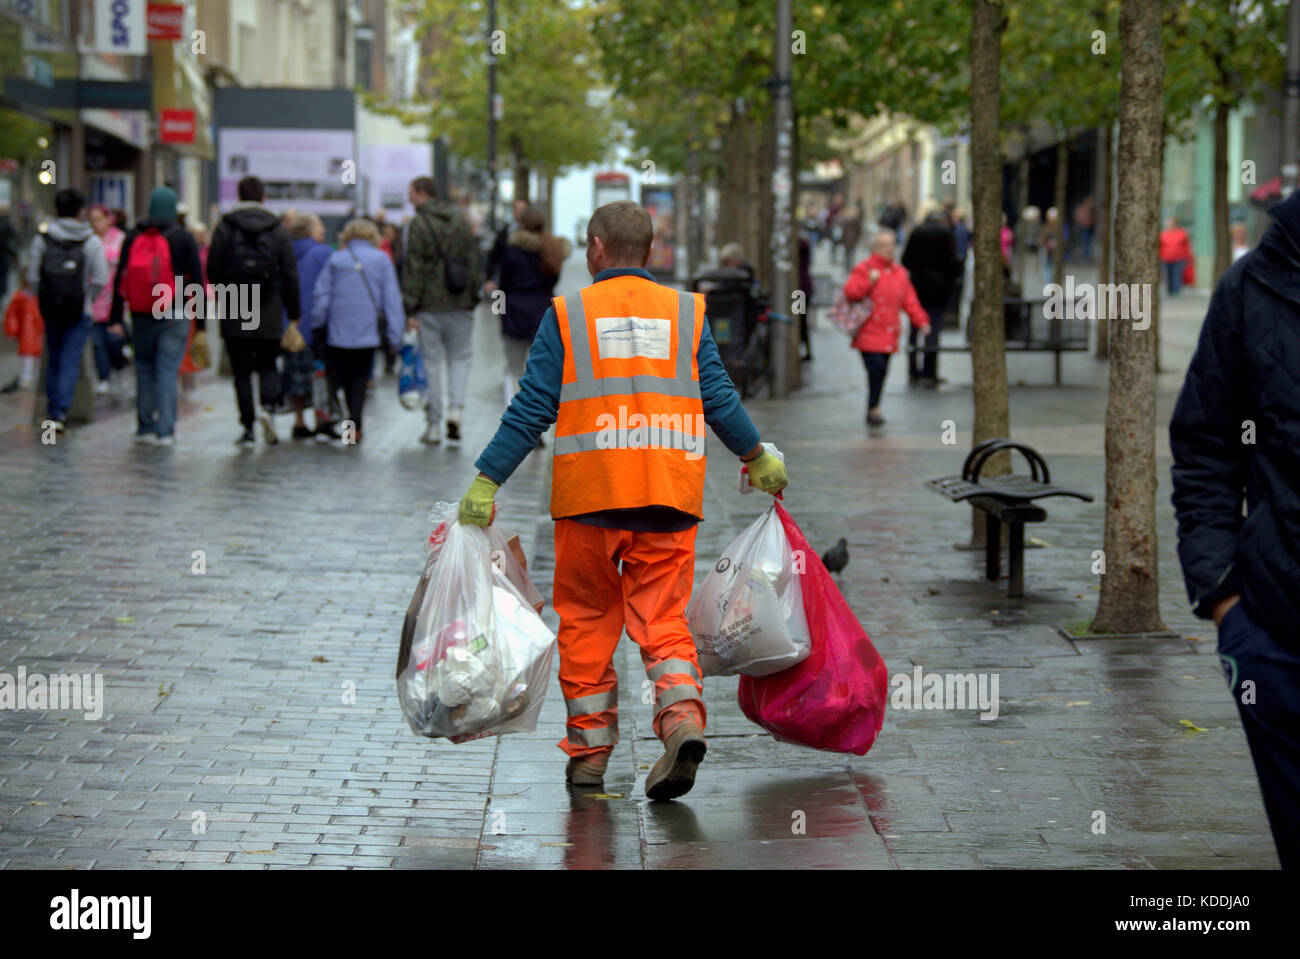 Bin hombre rechazar collector Street Sweeper con bolsas de basura en la calle visto desde atrás Foto de stock